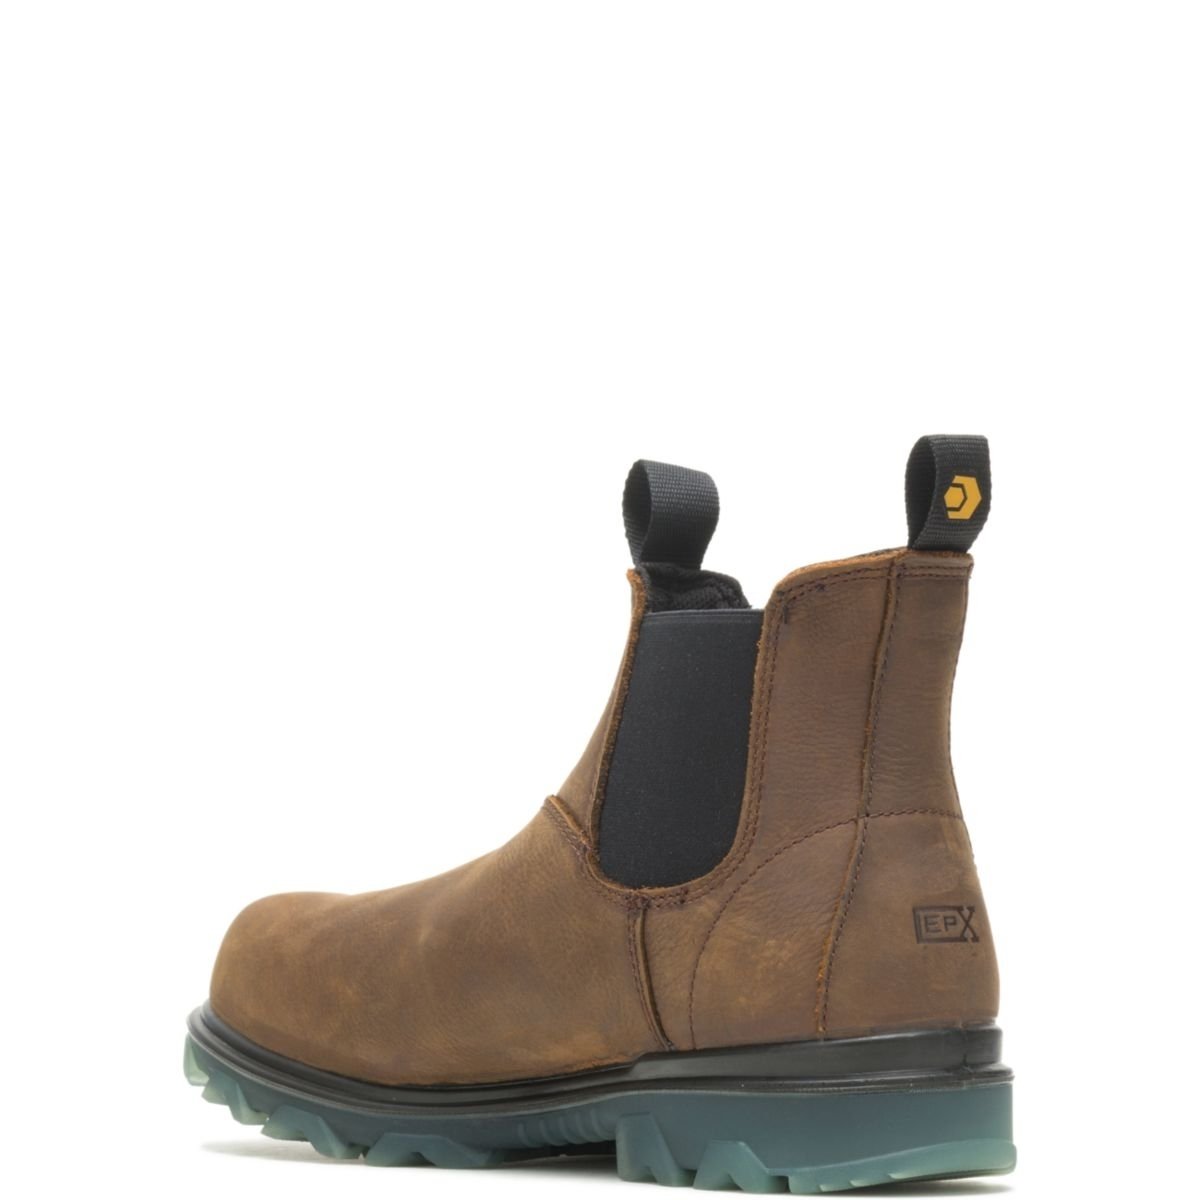 WOLVERINE Men's I-90 EPXÂ® Waterproof Soft Toe Romeo Pull On Work Boot Brown - W10790 - SUDAN BROWN, 11.5